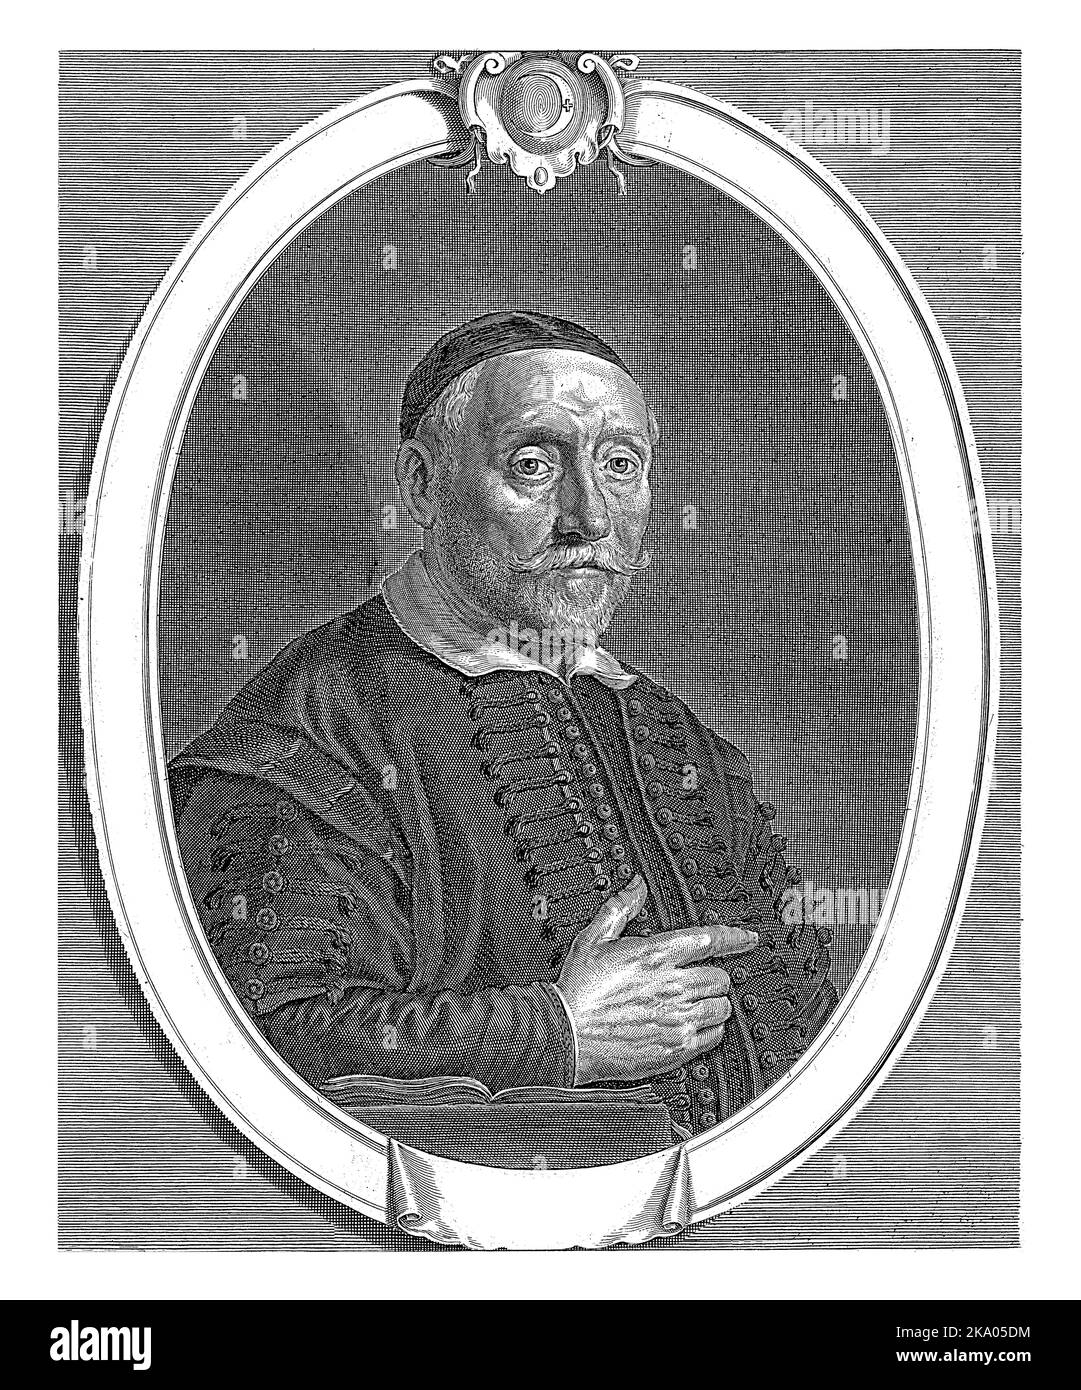 Portrait of Jacobus Olaeus, pastor in Amsterdam. Stock Photo